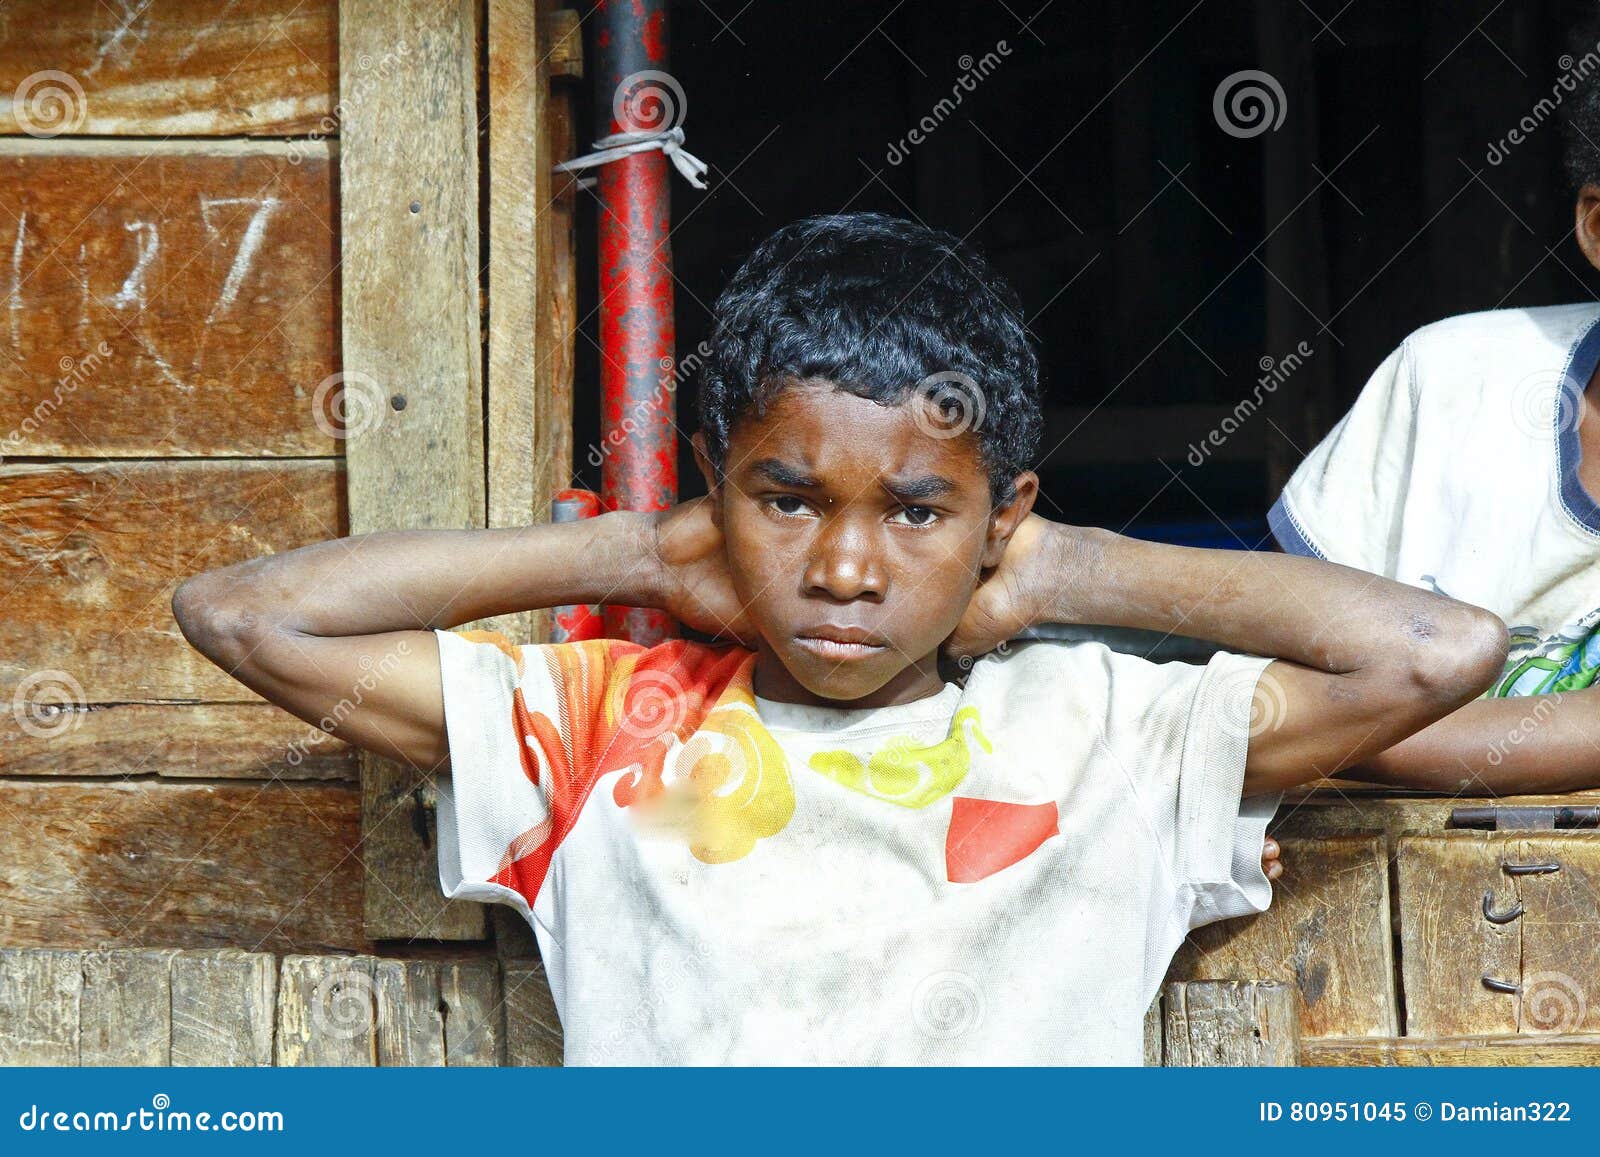 African Boy in Malgasy Village Editorial Image - Image of braid, exotic ...